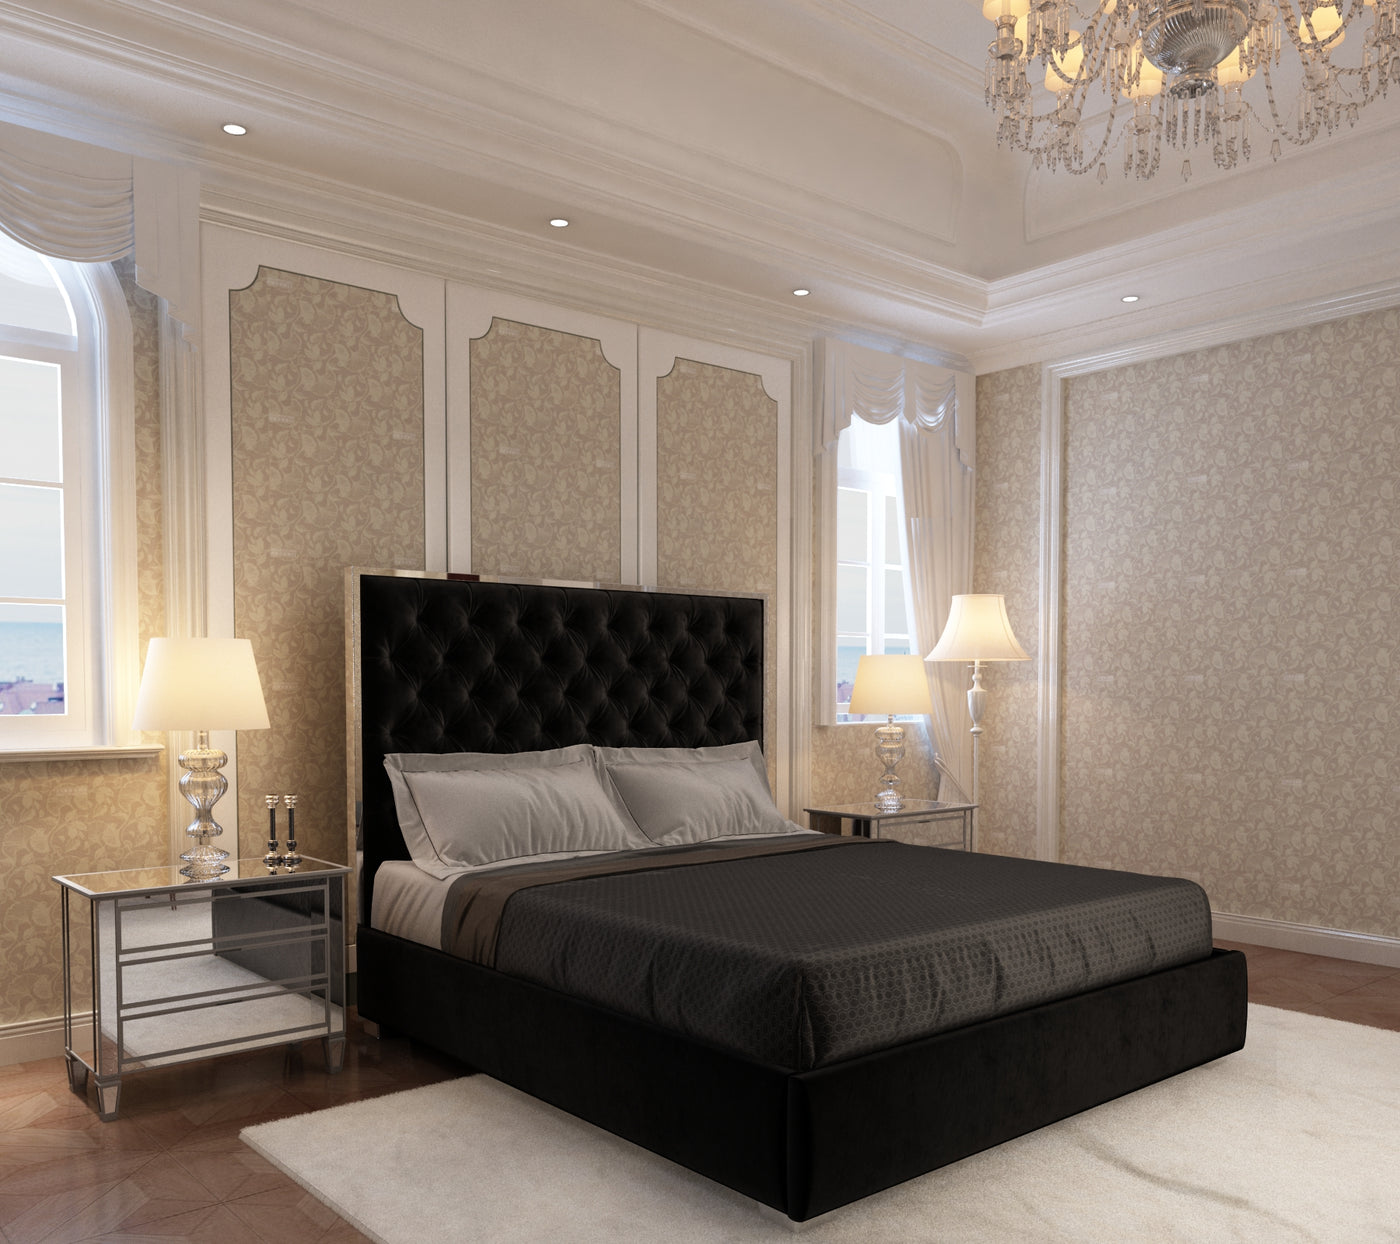 Queen Bed frame- Furniture valley Beds 505764  Beds & Bed Frames (505764)